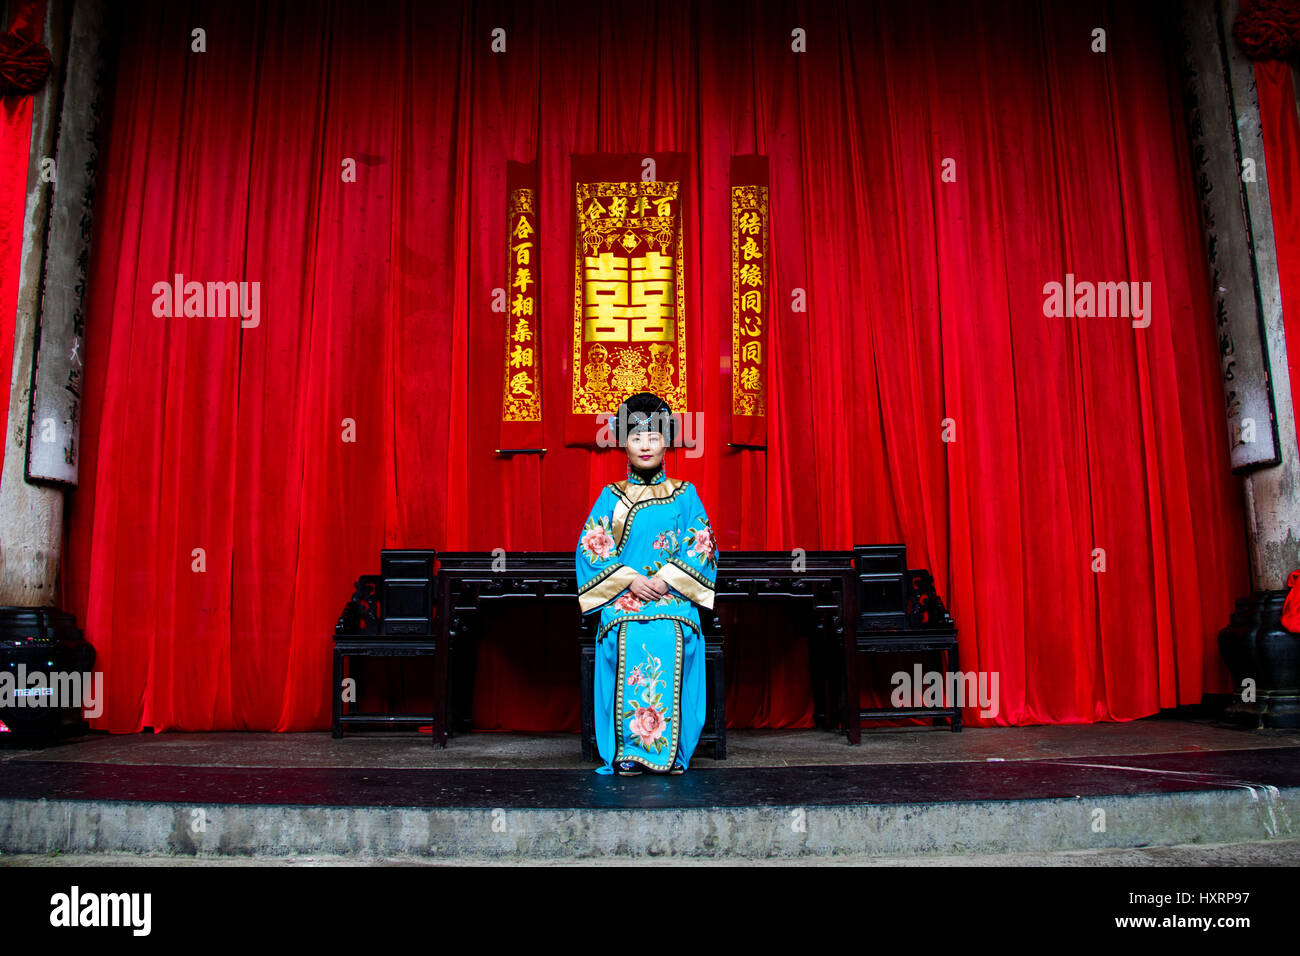 Reenactor wearing traditional clothing, Xidi, traditional Chinese village, Huizhou, China Stock Photo